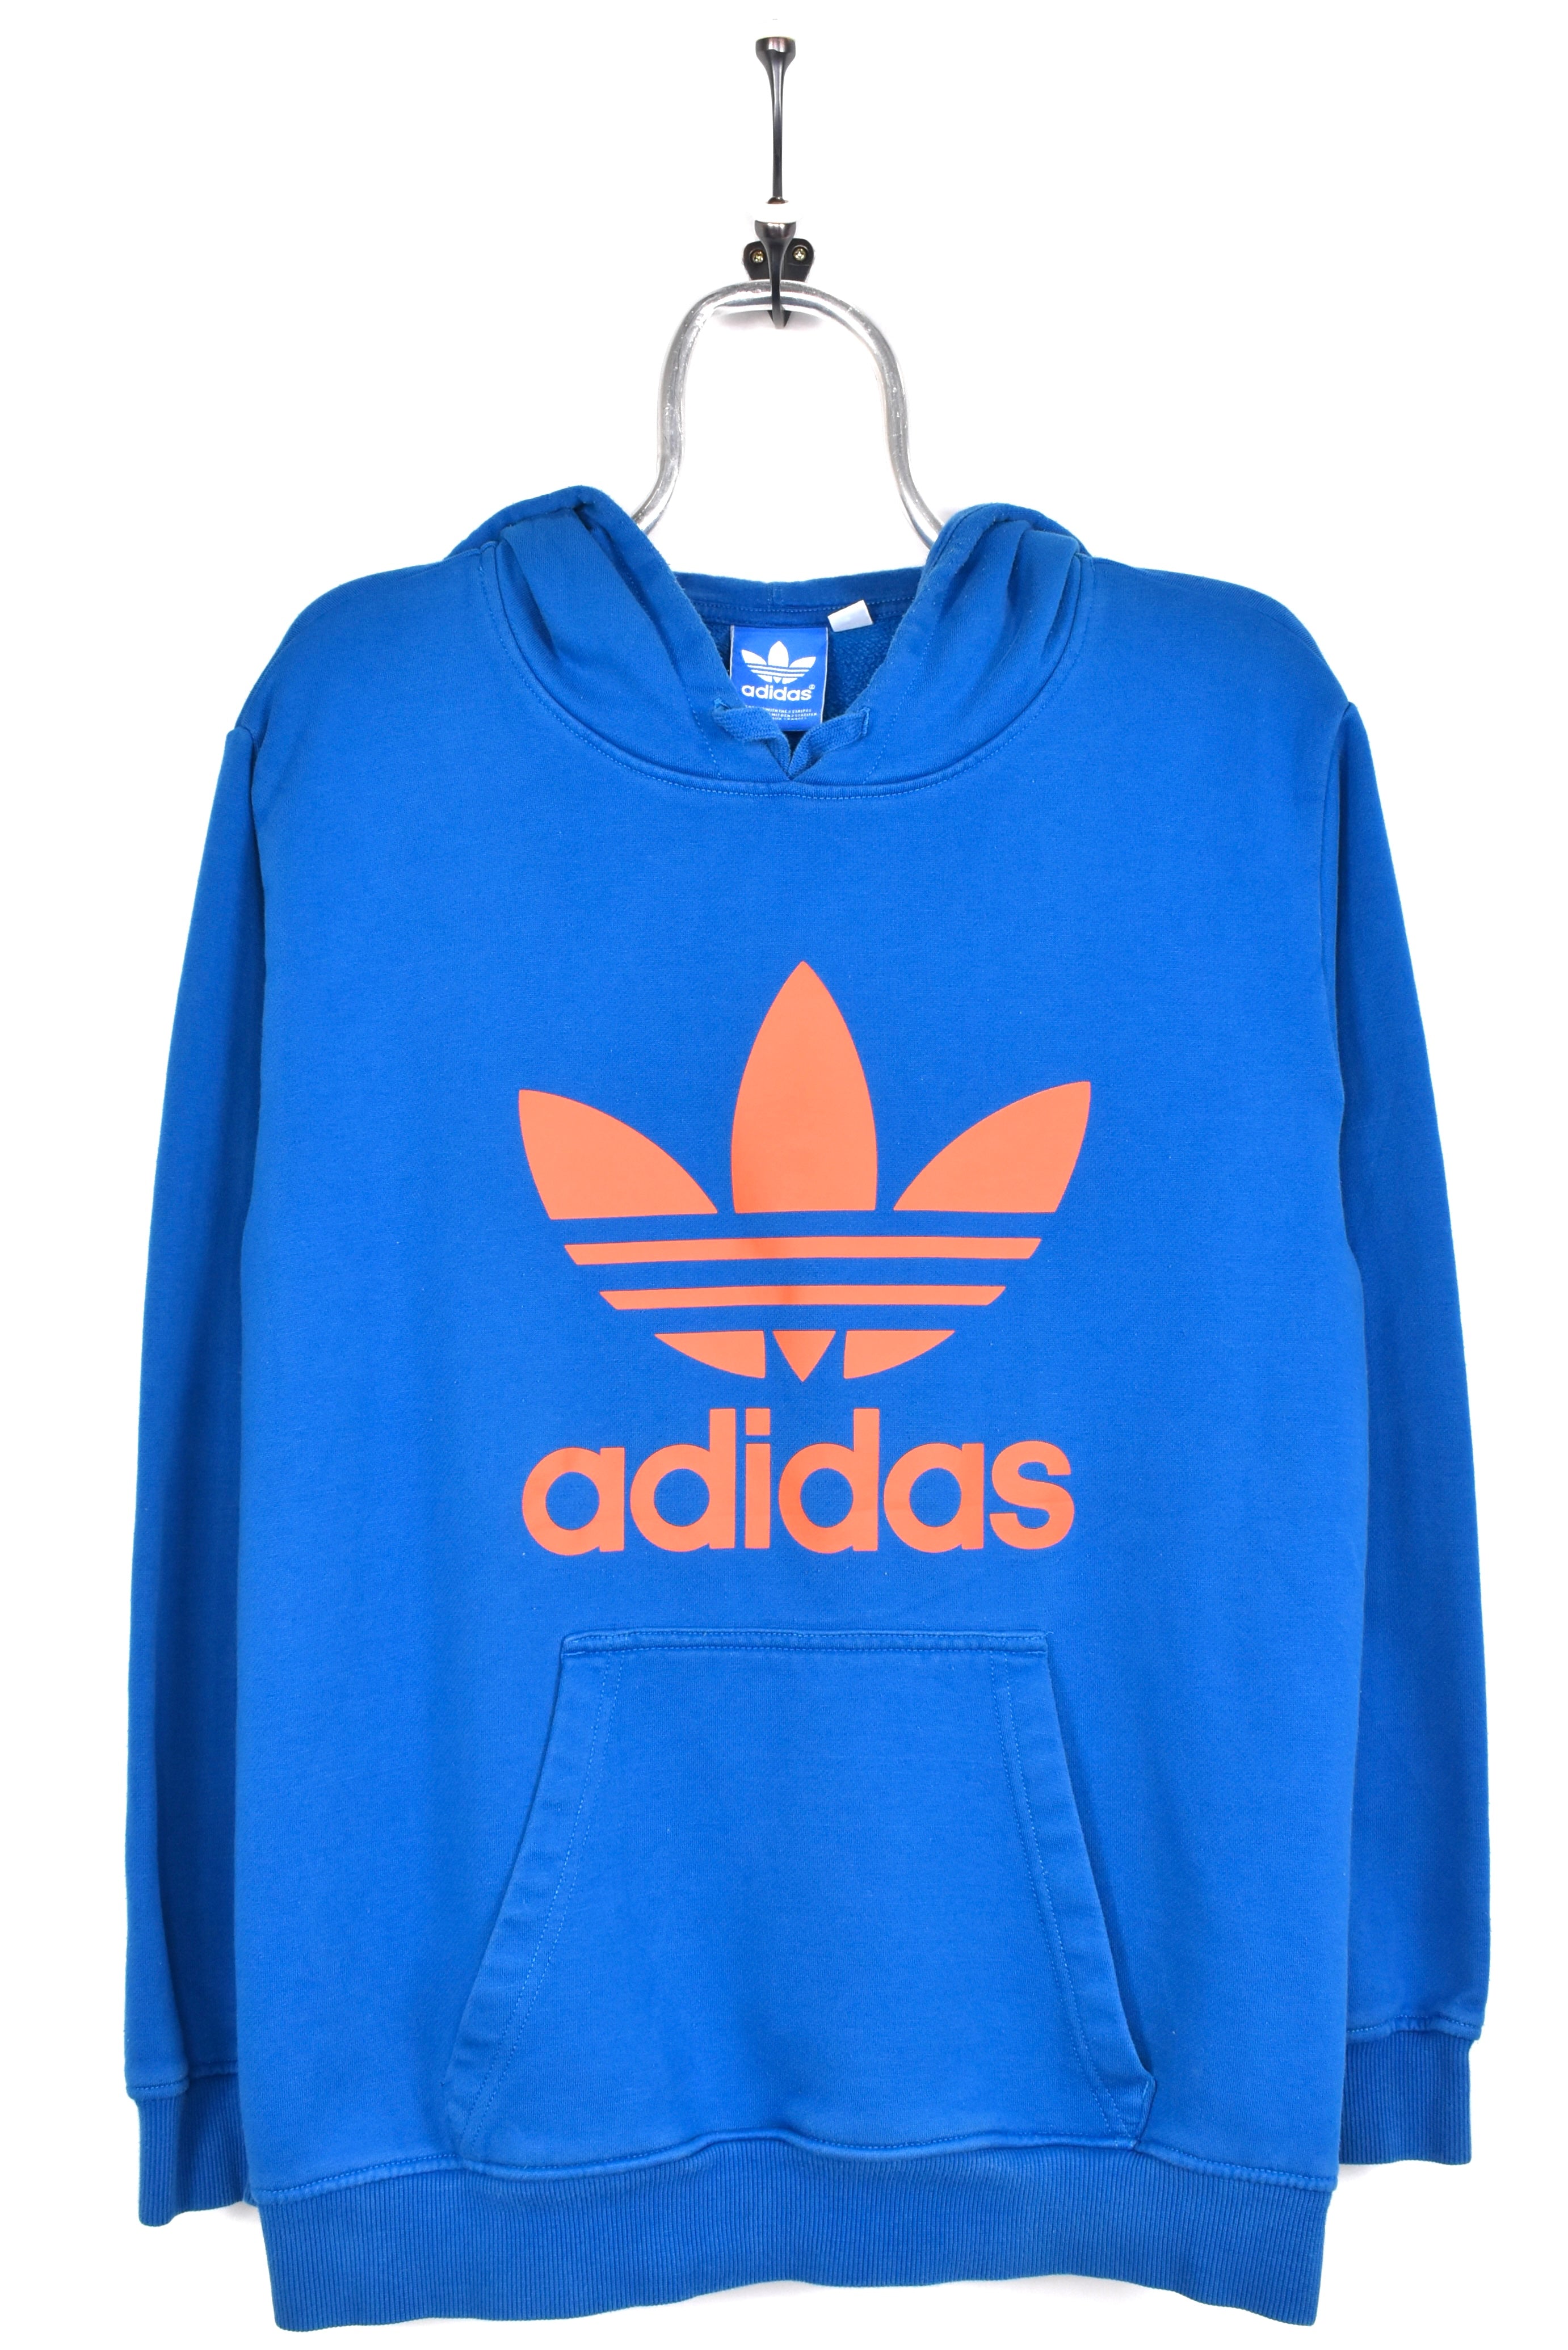 Modern Adidas hoodie, blue graphic sweatshirt - AU Large ADIDAS